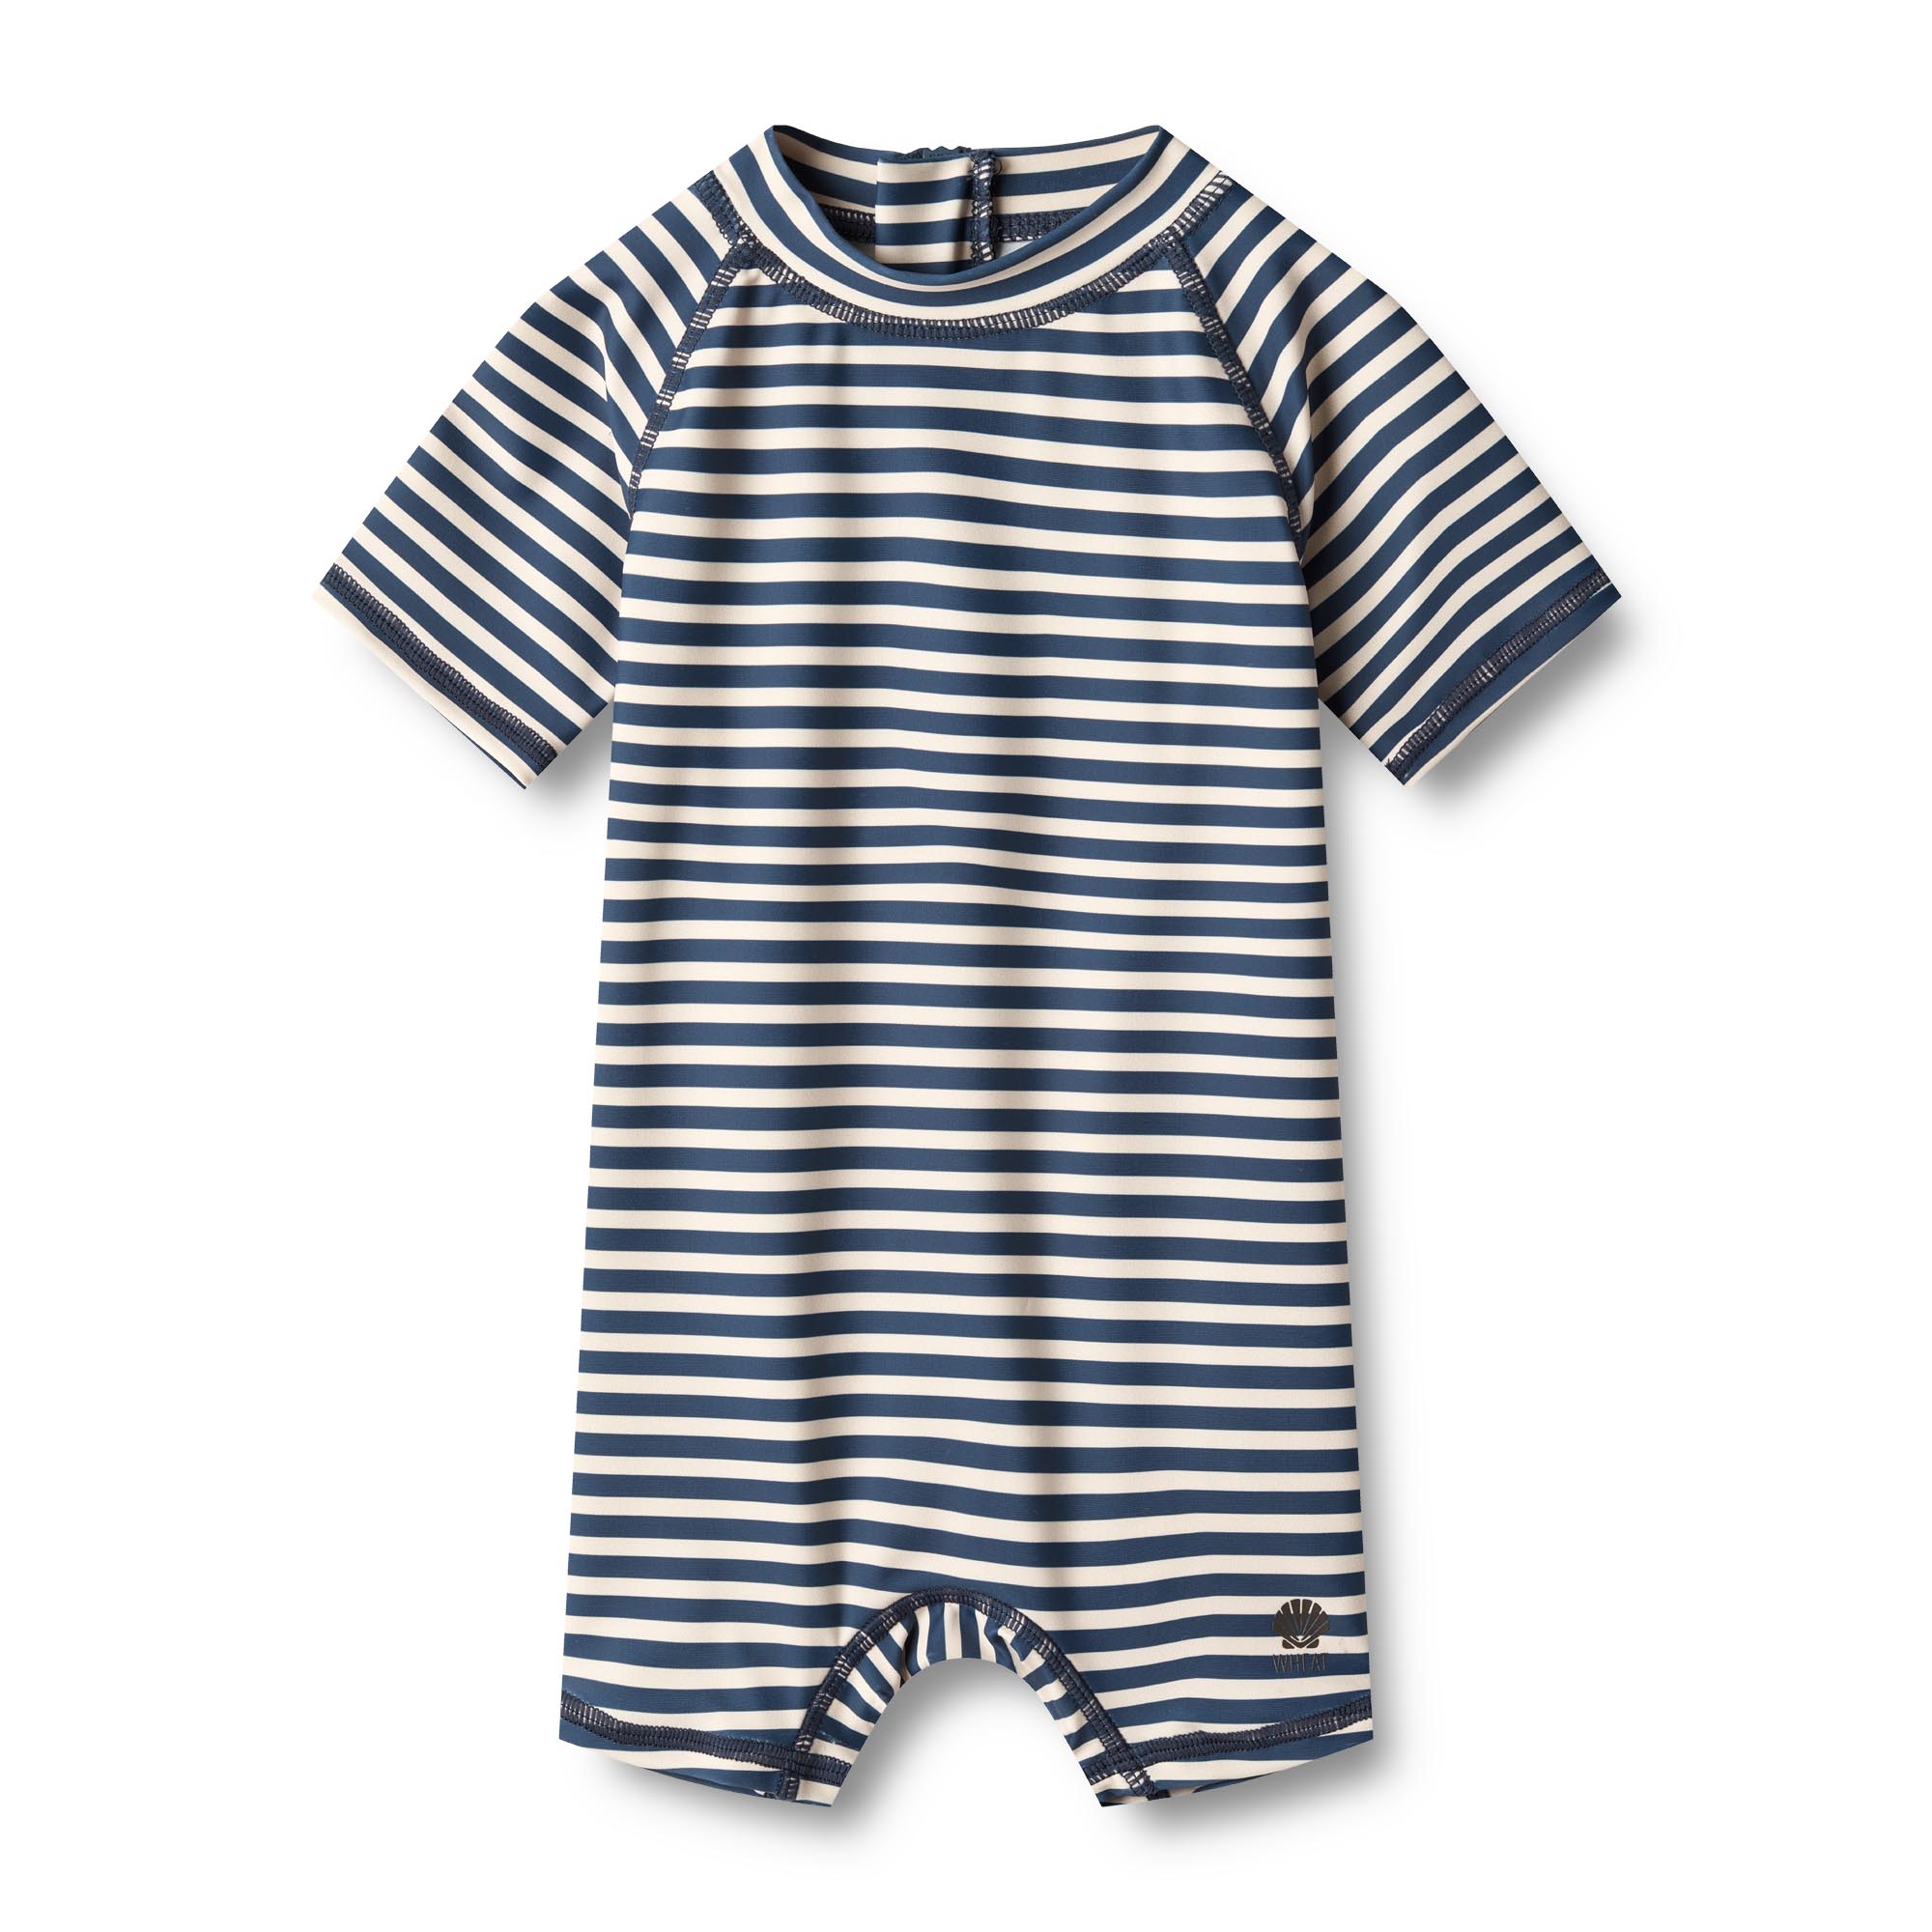 Jeff&Joy-Wheat-Swimsuit-S-S-Cas-1325-indigo-stripe